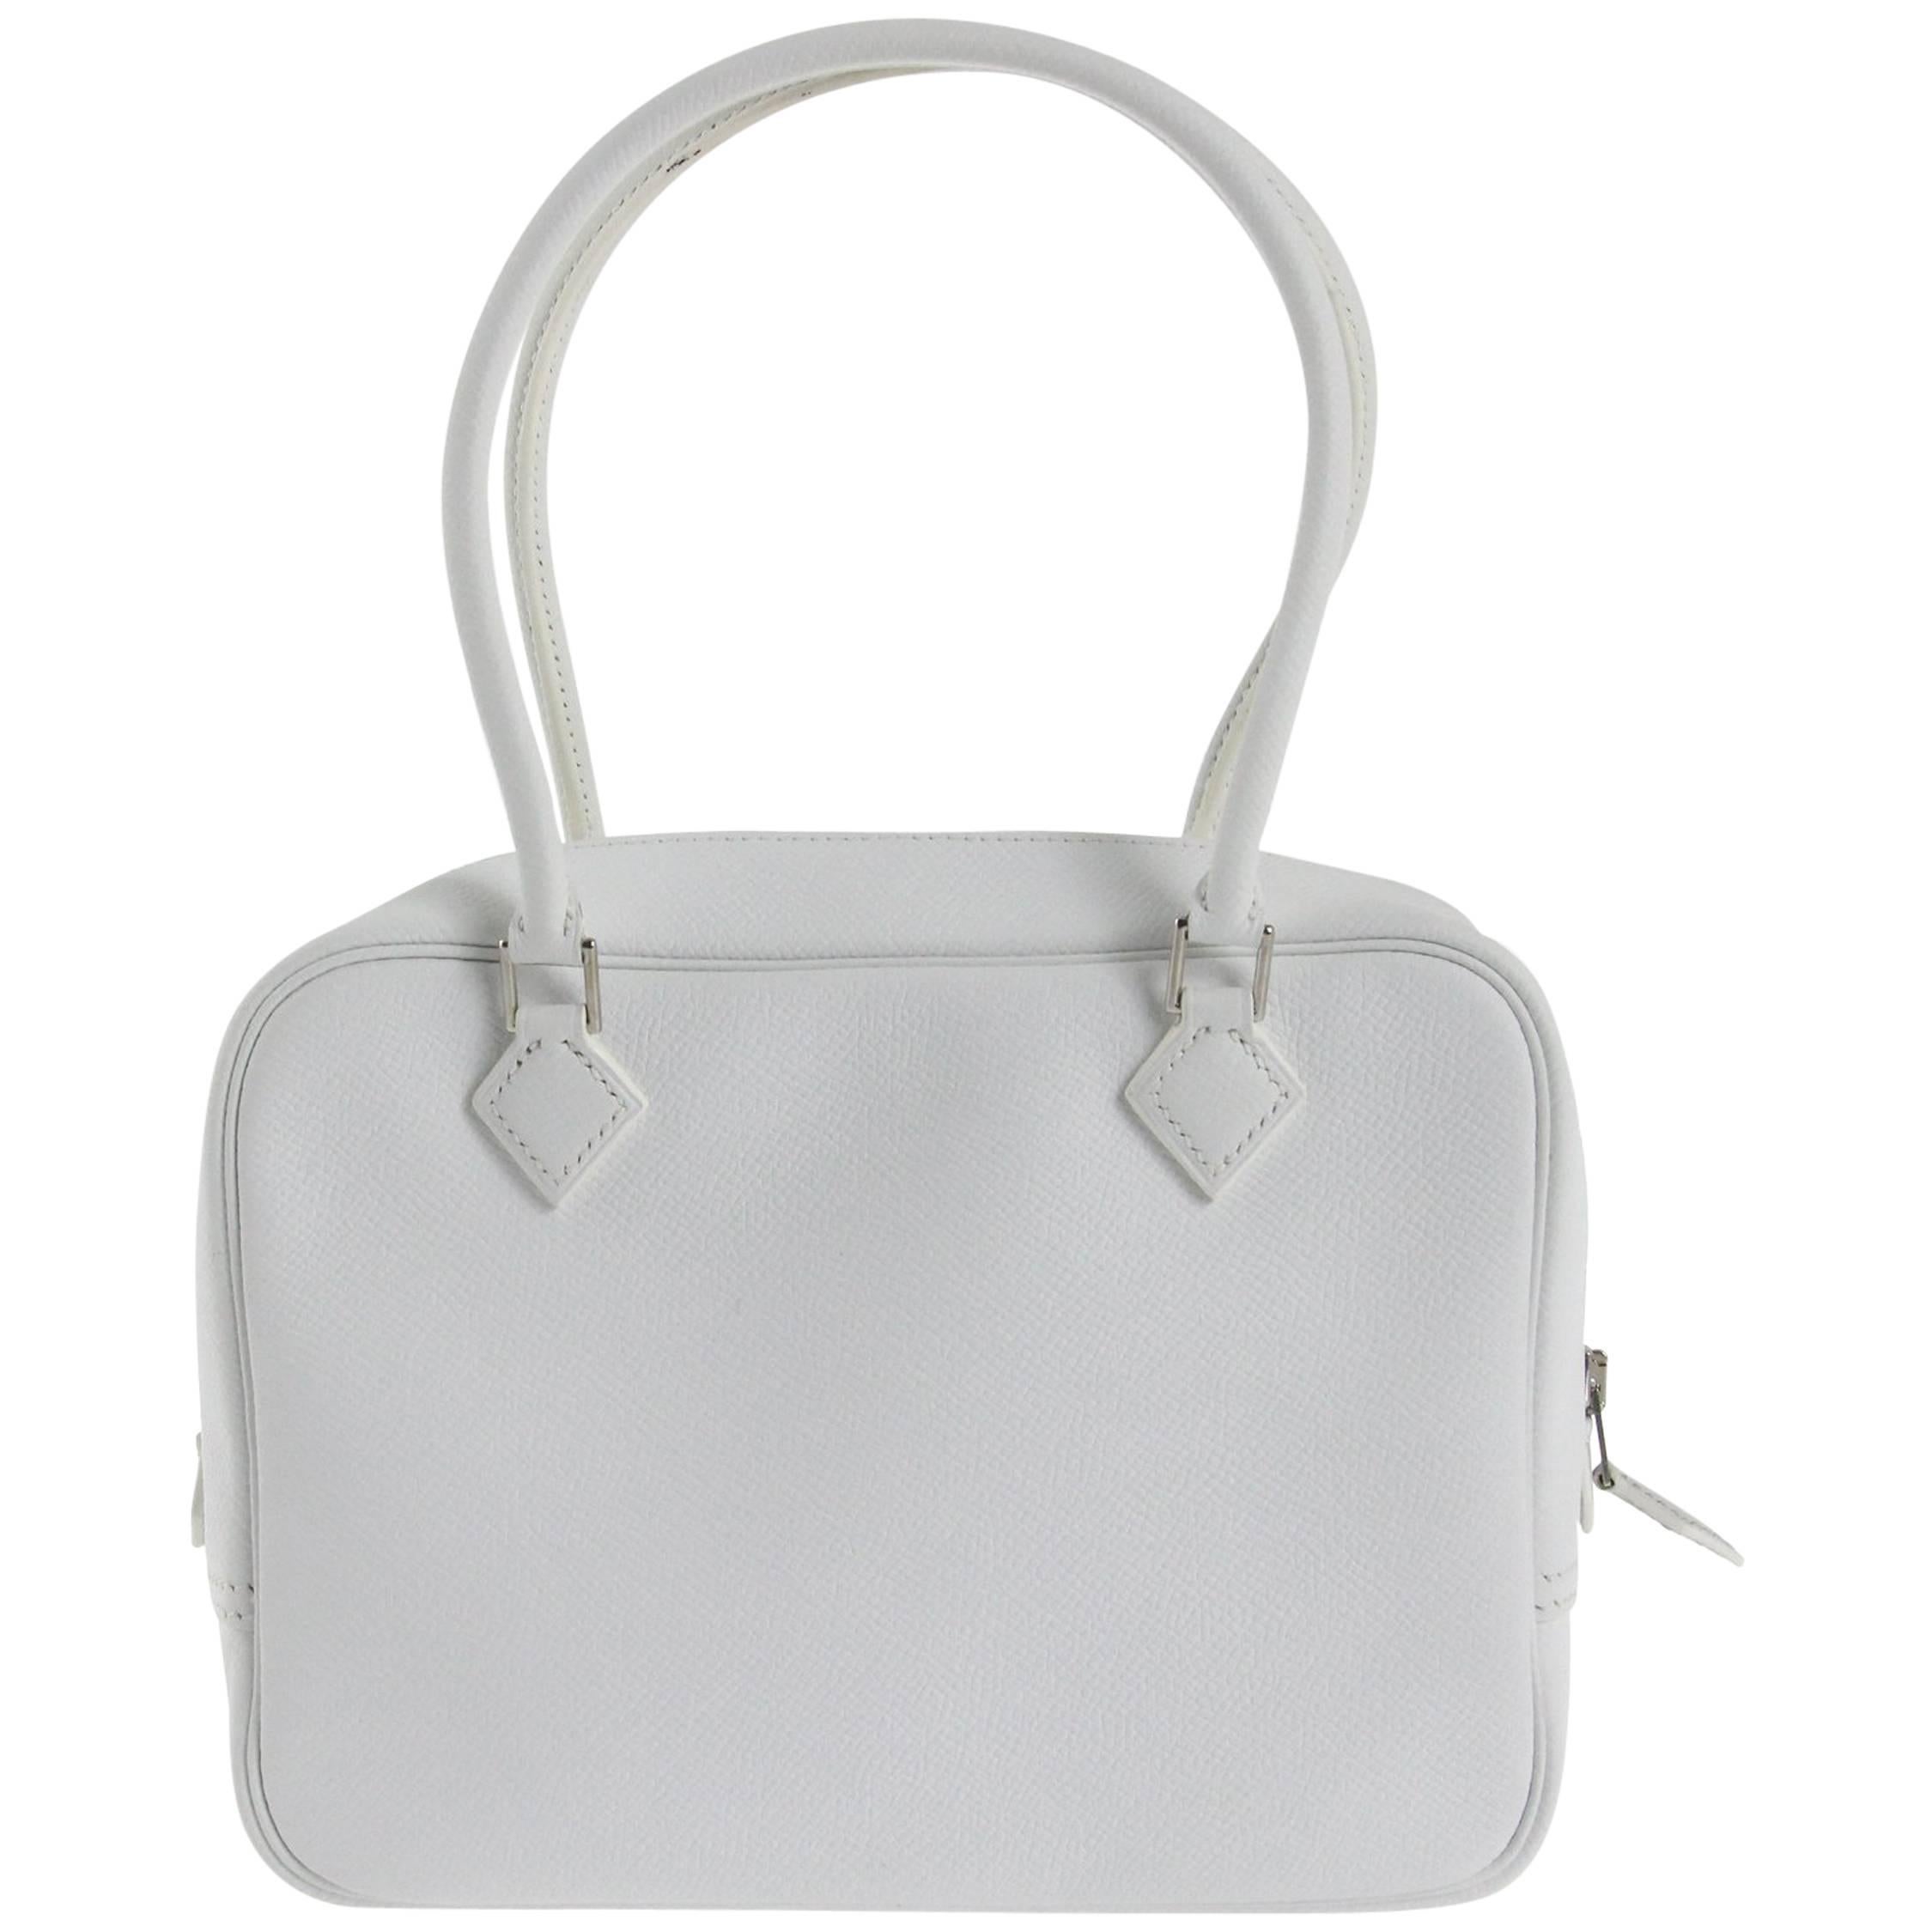 2007 Optic White Hermès "Plume" handbag